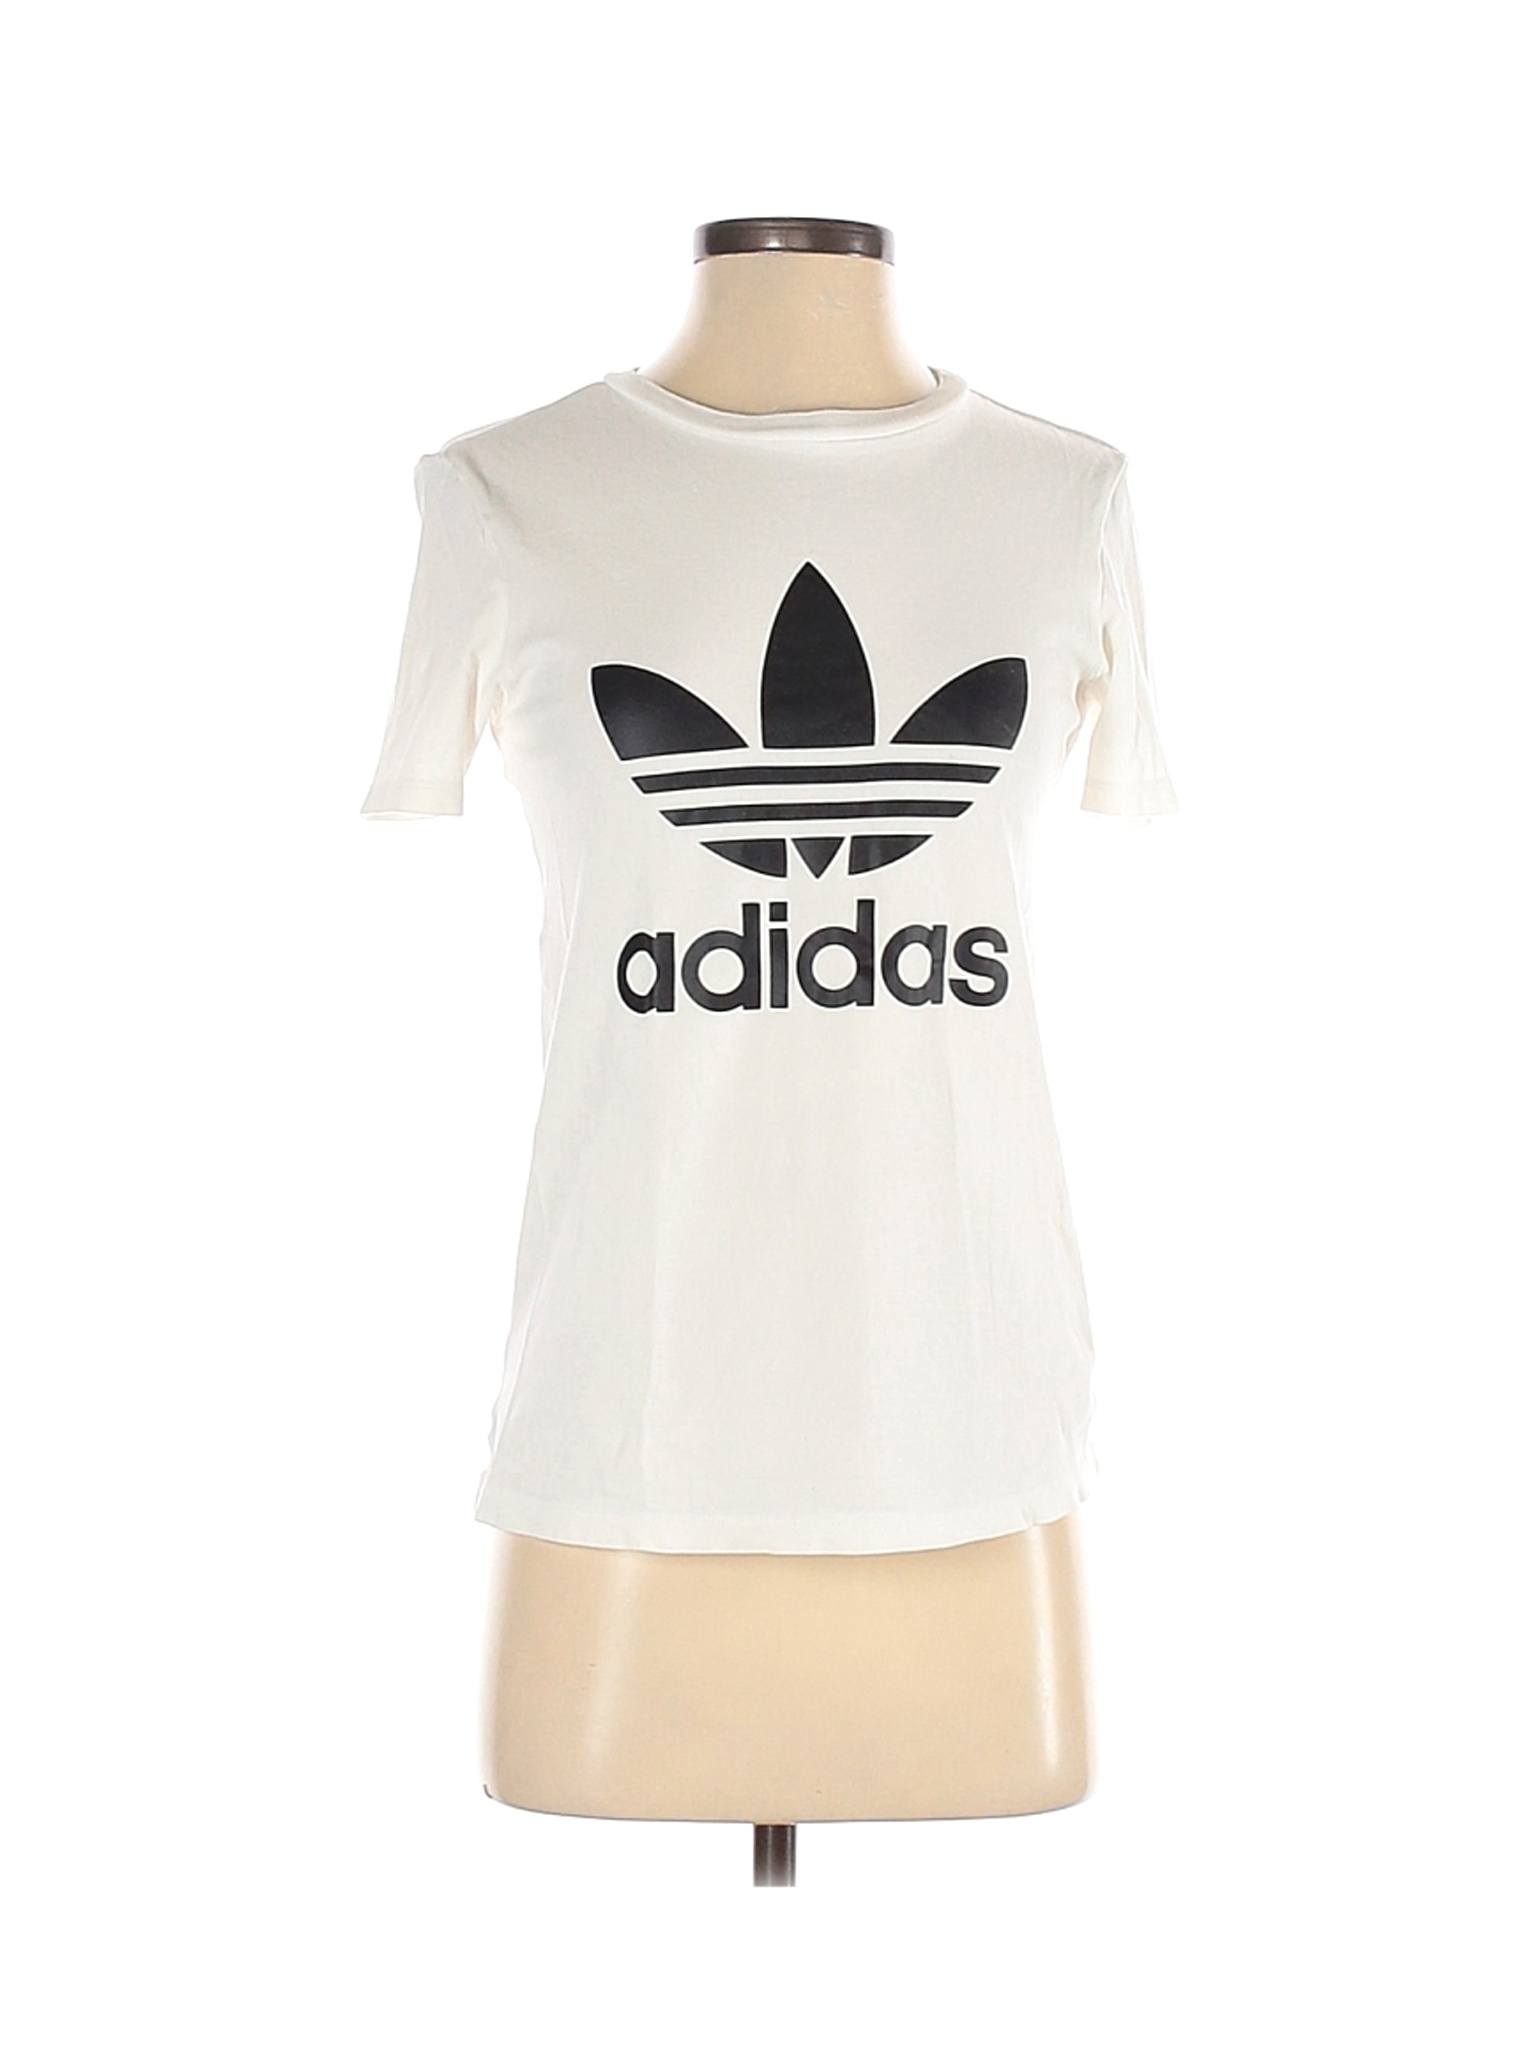 Adidas Women White Short Sleeve T-Shirt XS | eBay